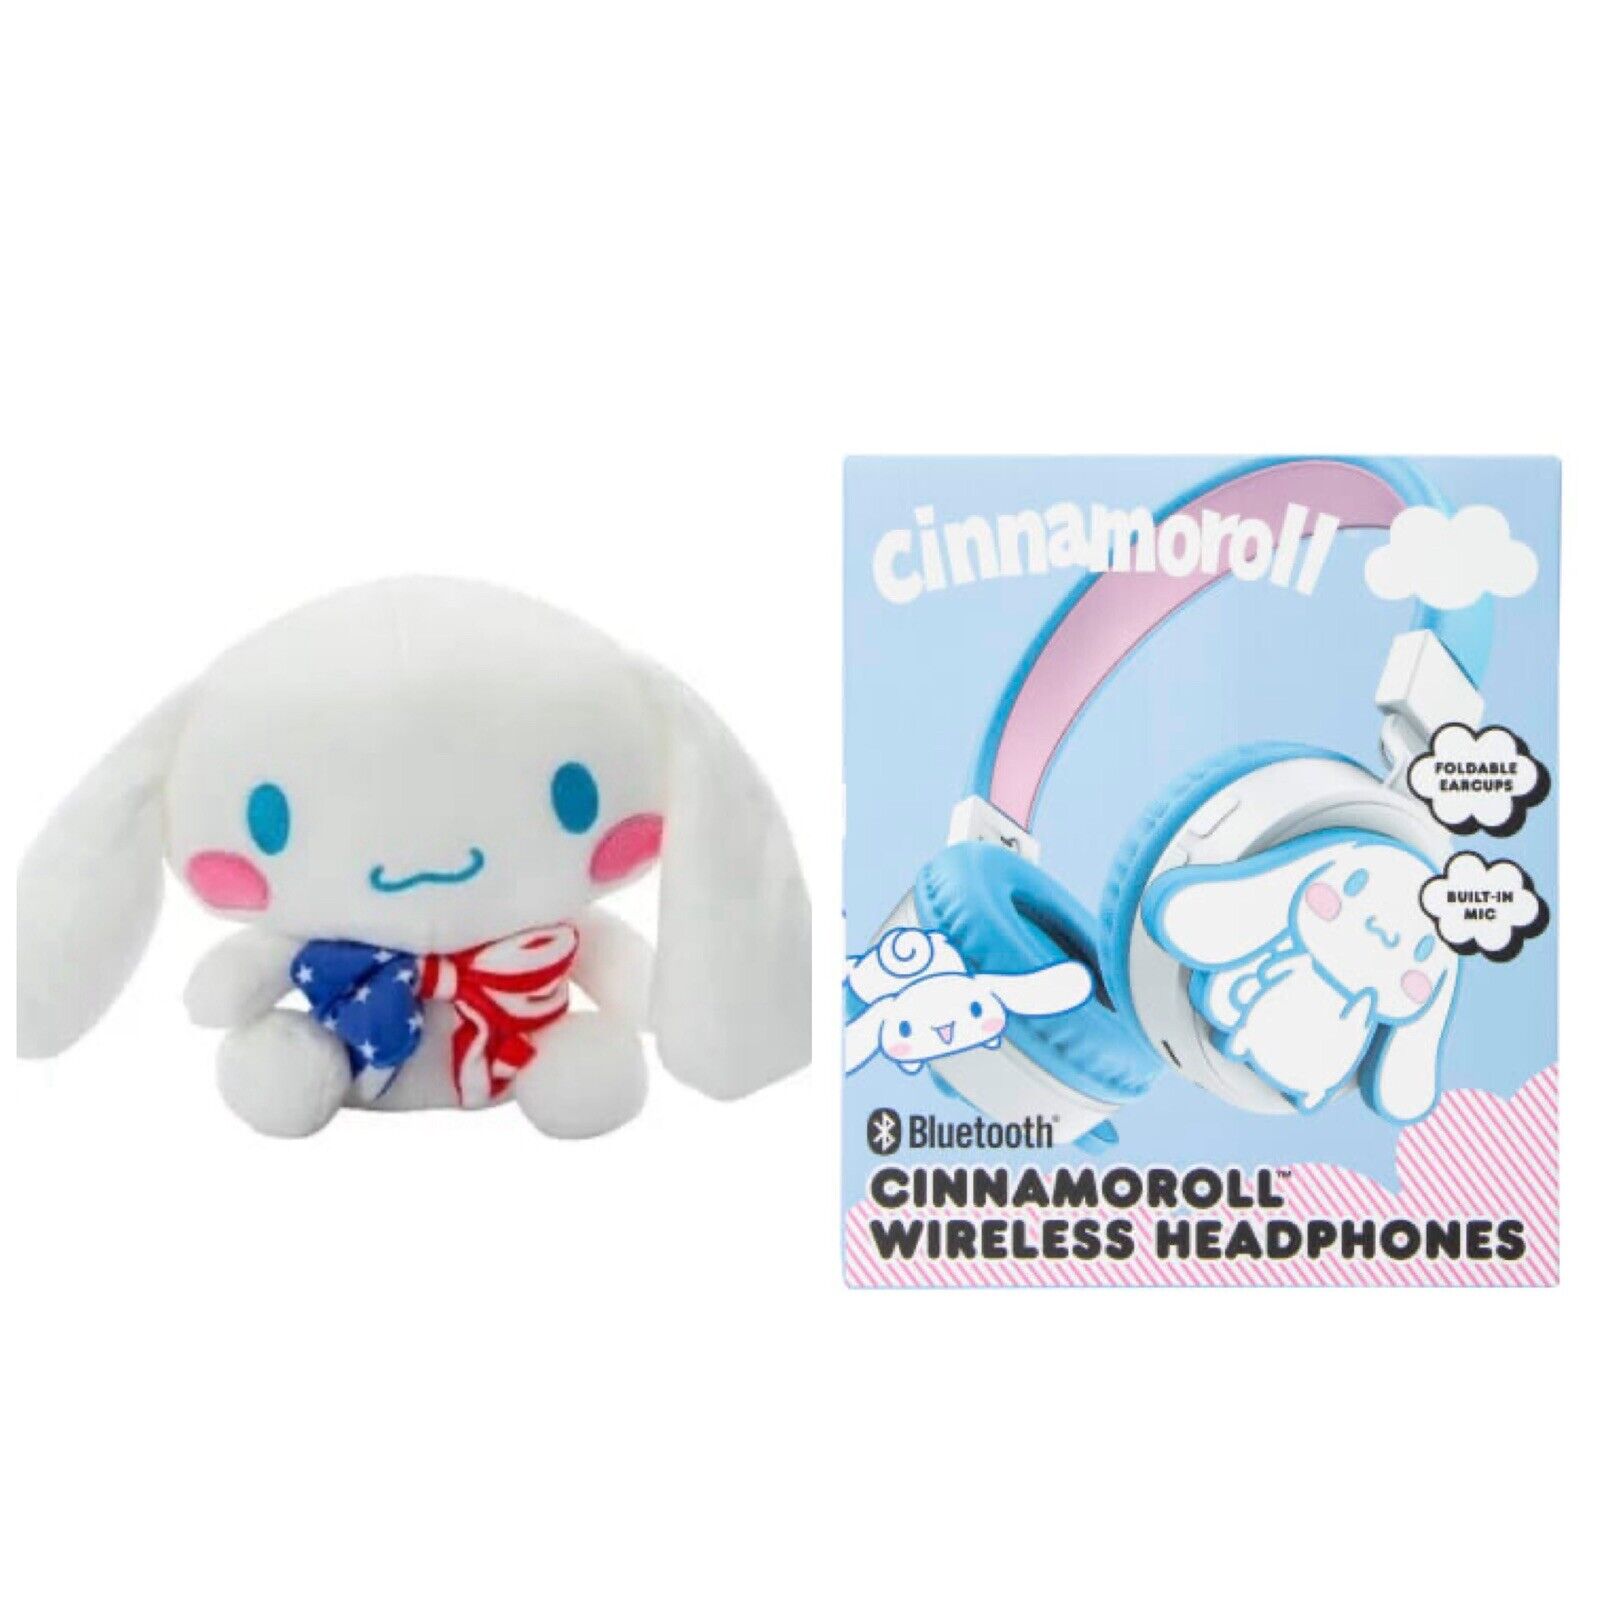 New 2pc Cinnamonroll Bluetooth Wireless Headphones & 7.5in Patriotic Plush